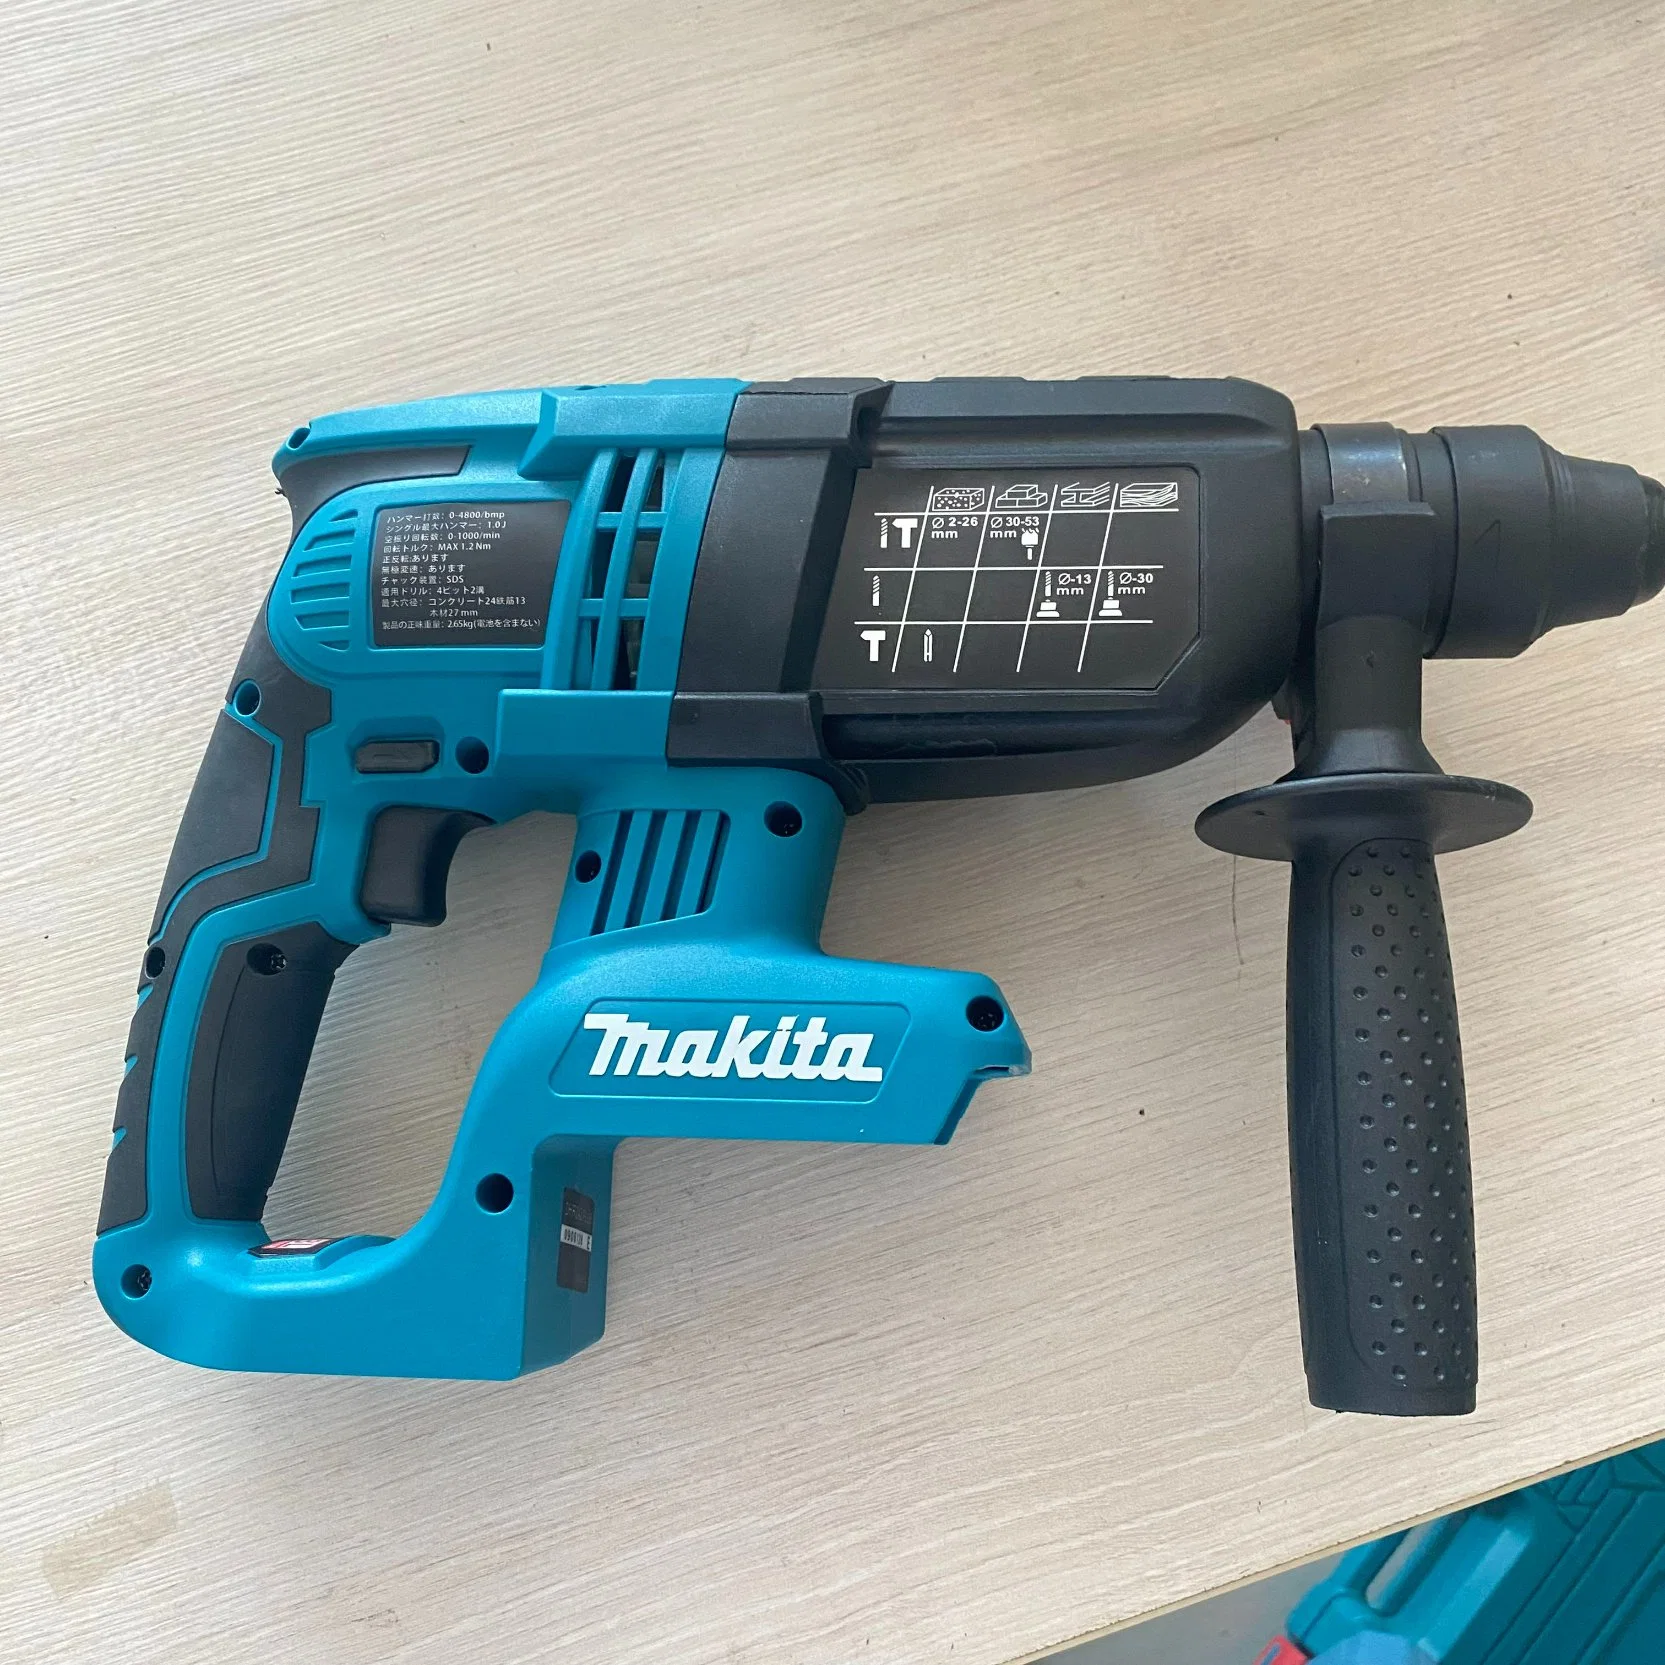 Dhr242 Cordless Electric Screwdriver Brushless Rotary Hammer 18V Makita Tools